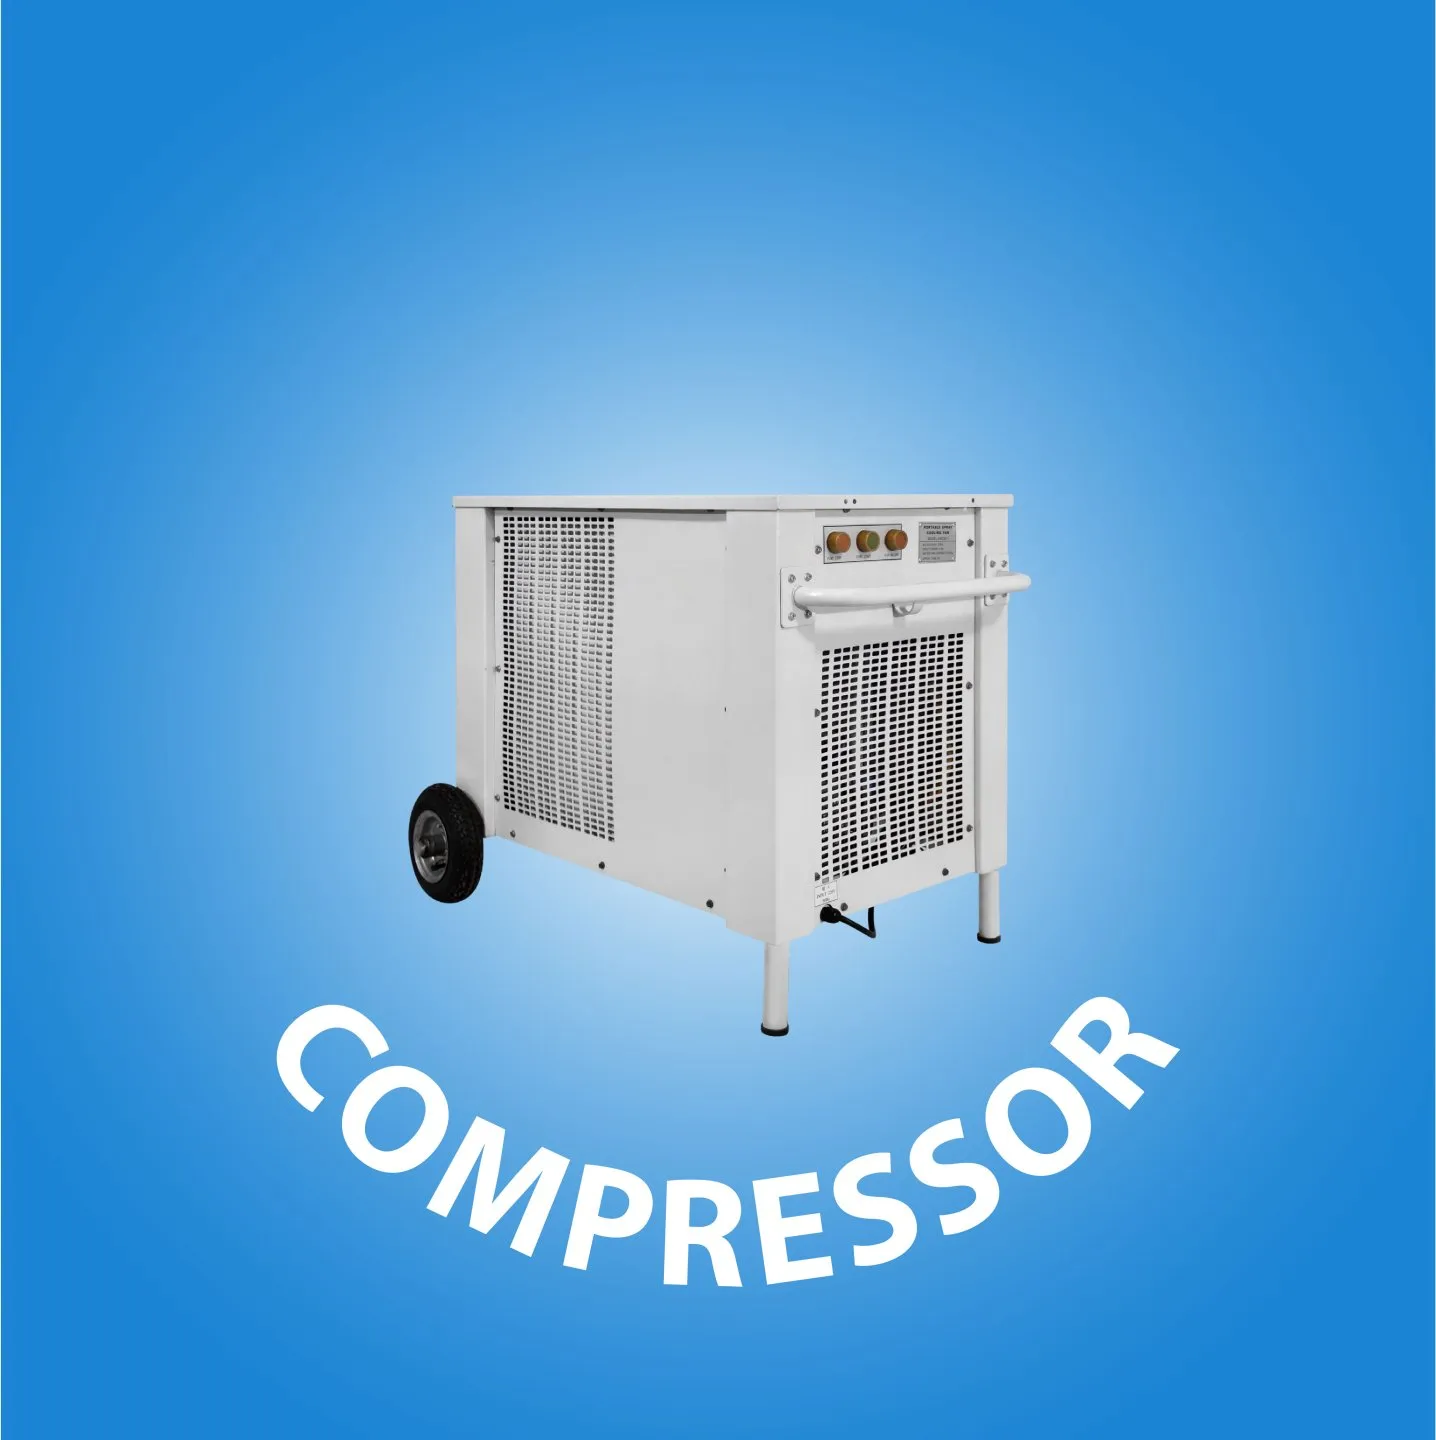  Compressor cover kategori website 15